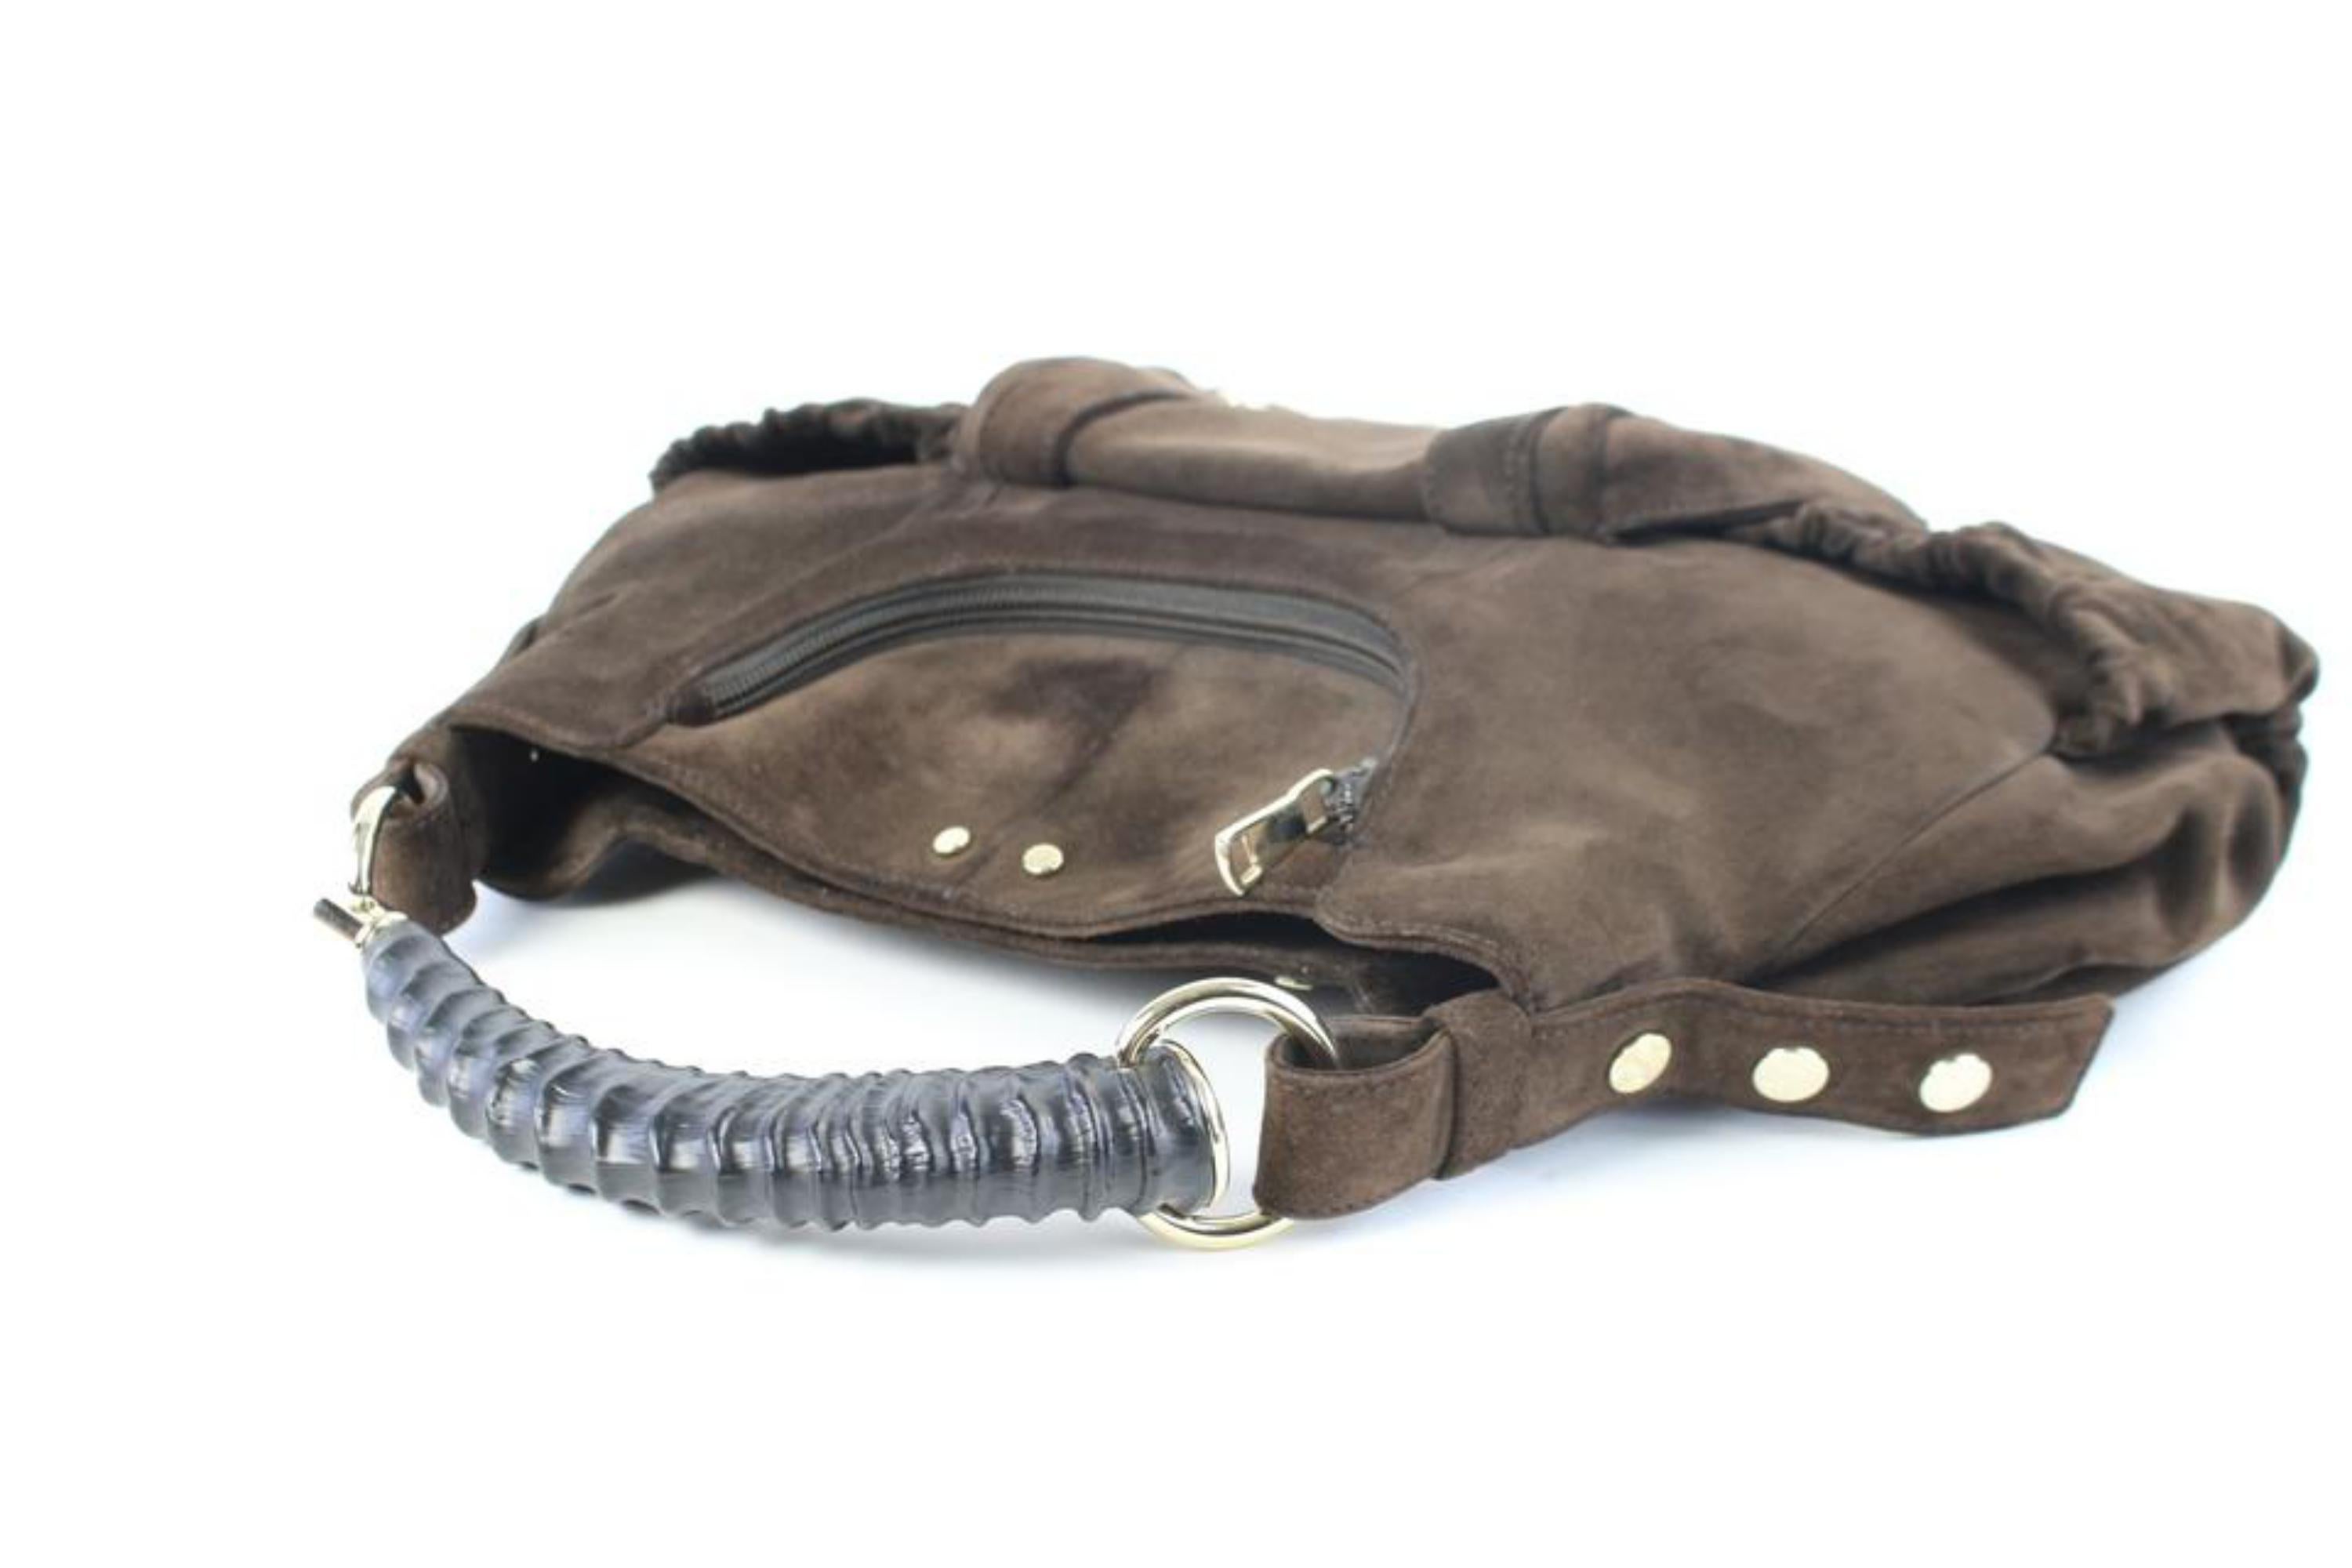 Saint Laurent Mombasa Hobo 02mz0710 Brown Suede Leather Shoulder Bag For Sale 3